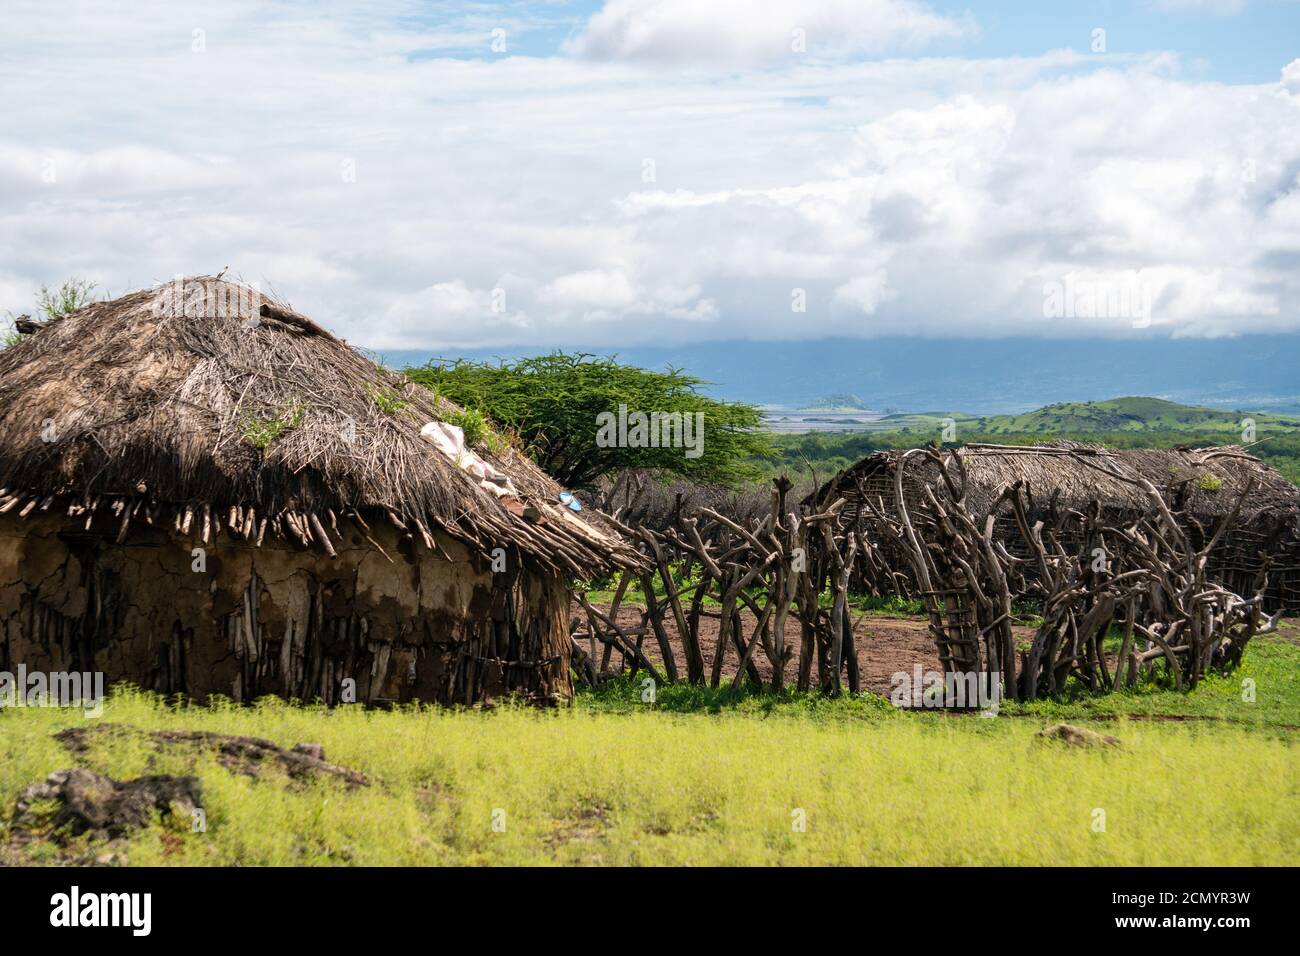 Traditional Maasai Village with Clay Round Huts in Engare Sero area near Lake Natron and Ol Doinyo Lengai volcano in Tanzania, Africa Stock Photo